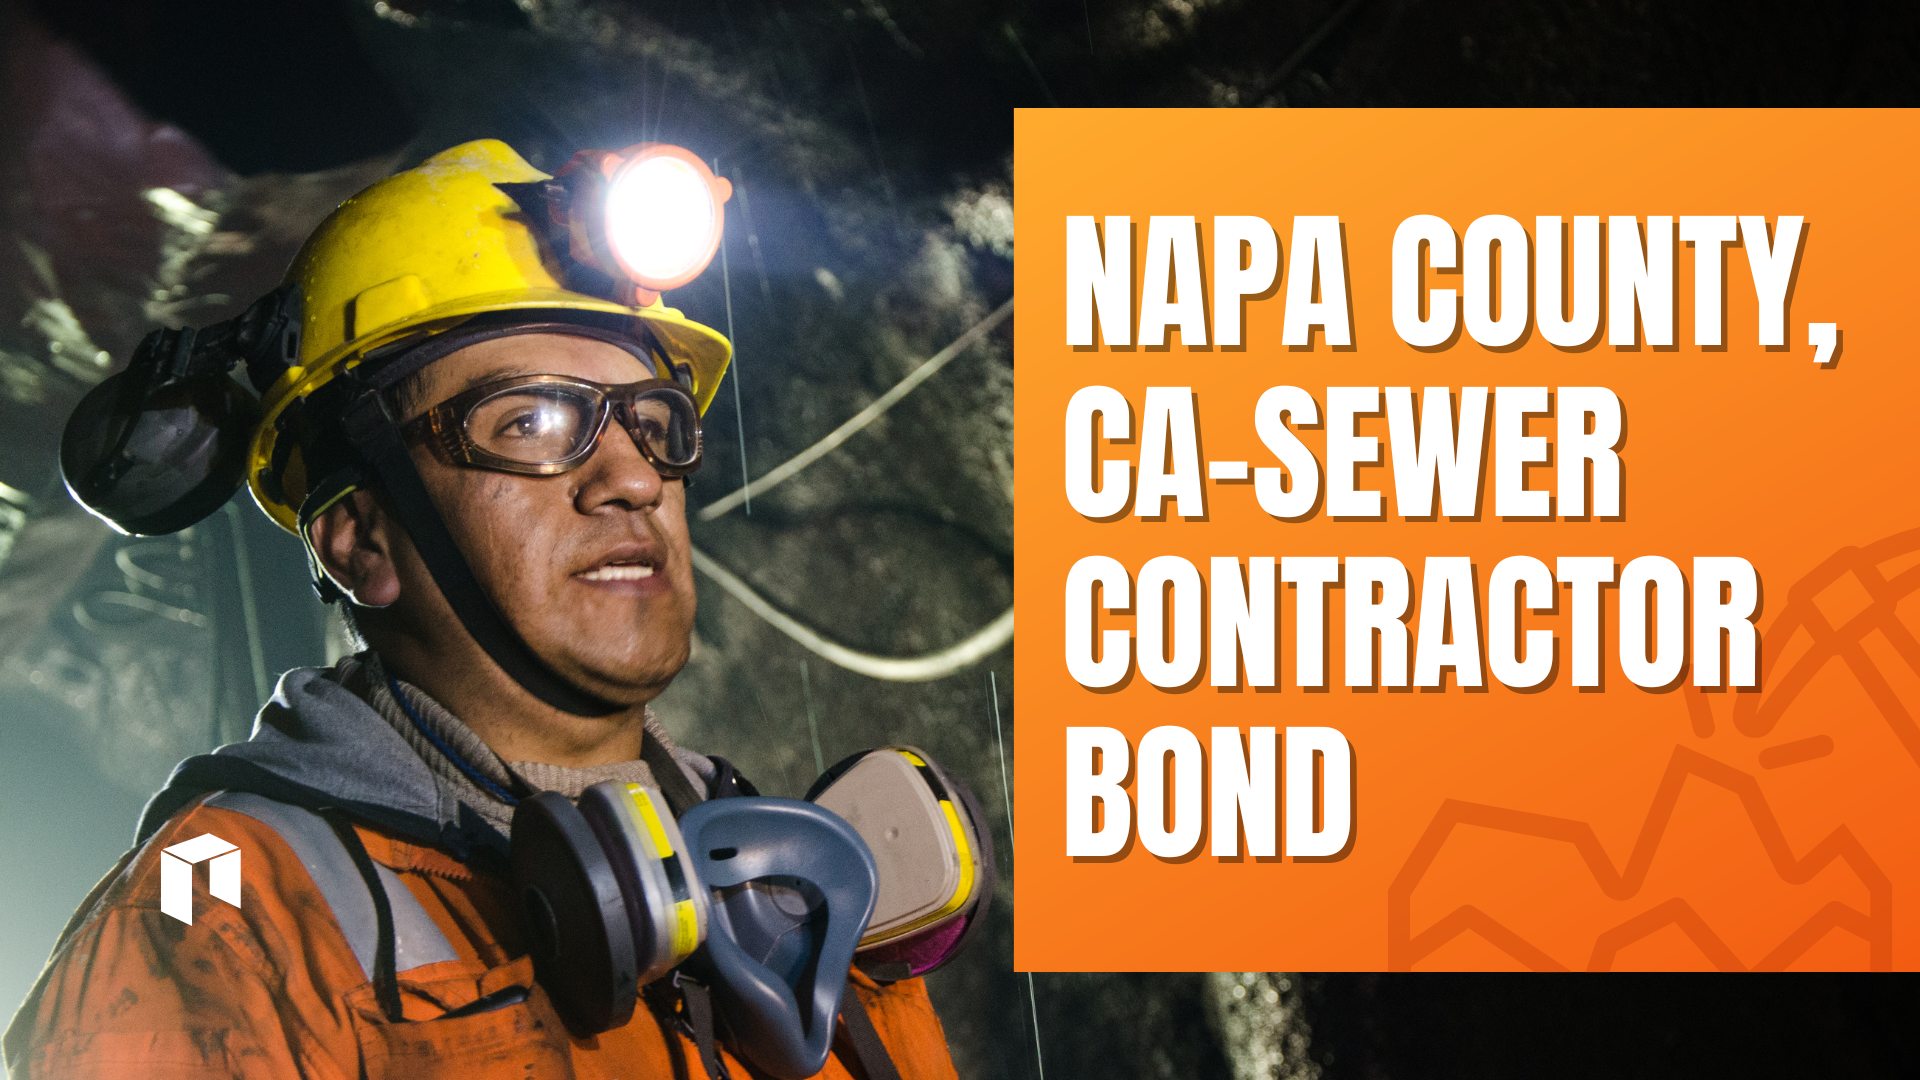 Surety Bond-Napa County, CA-Sewer Contractor Bond